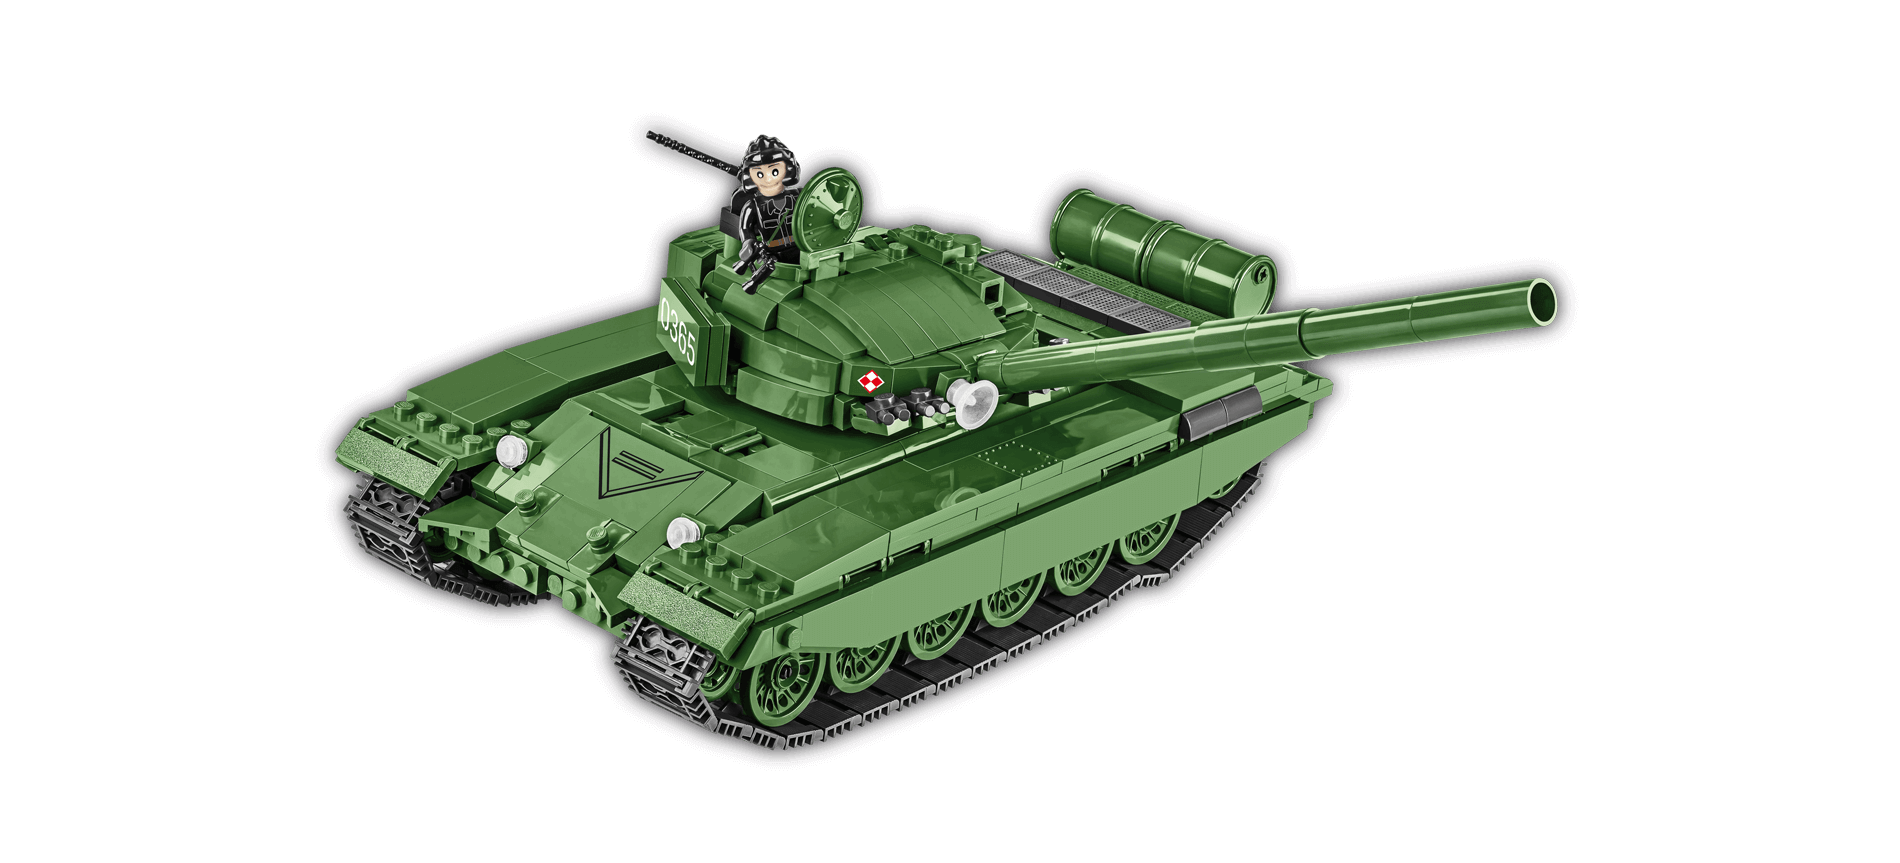 Купить танк 1 72. Конструктор Cobi small Army 2615 танк t-72 m1. Танк т-90 Cobi. Конструктор Tank t-72 от Cobi.